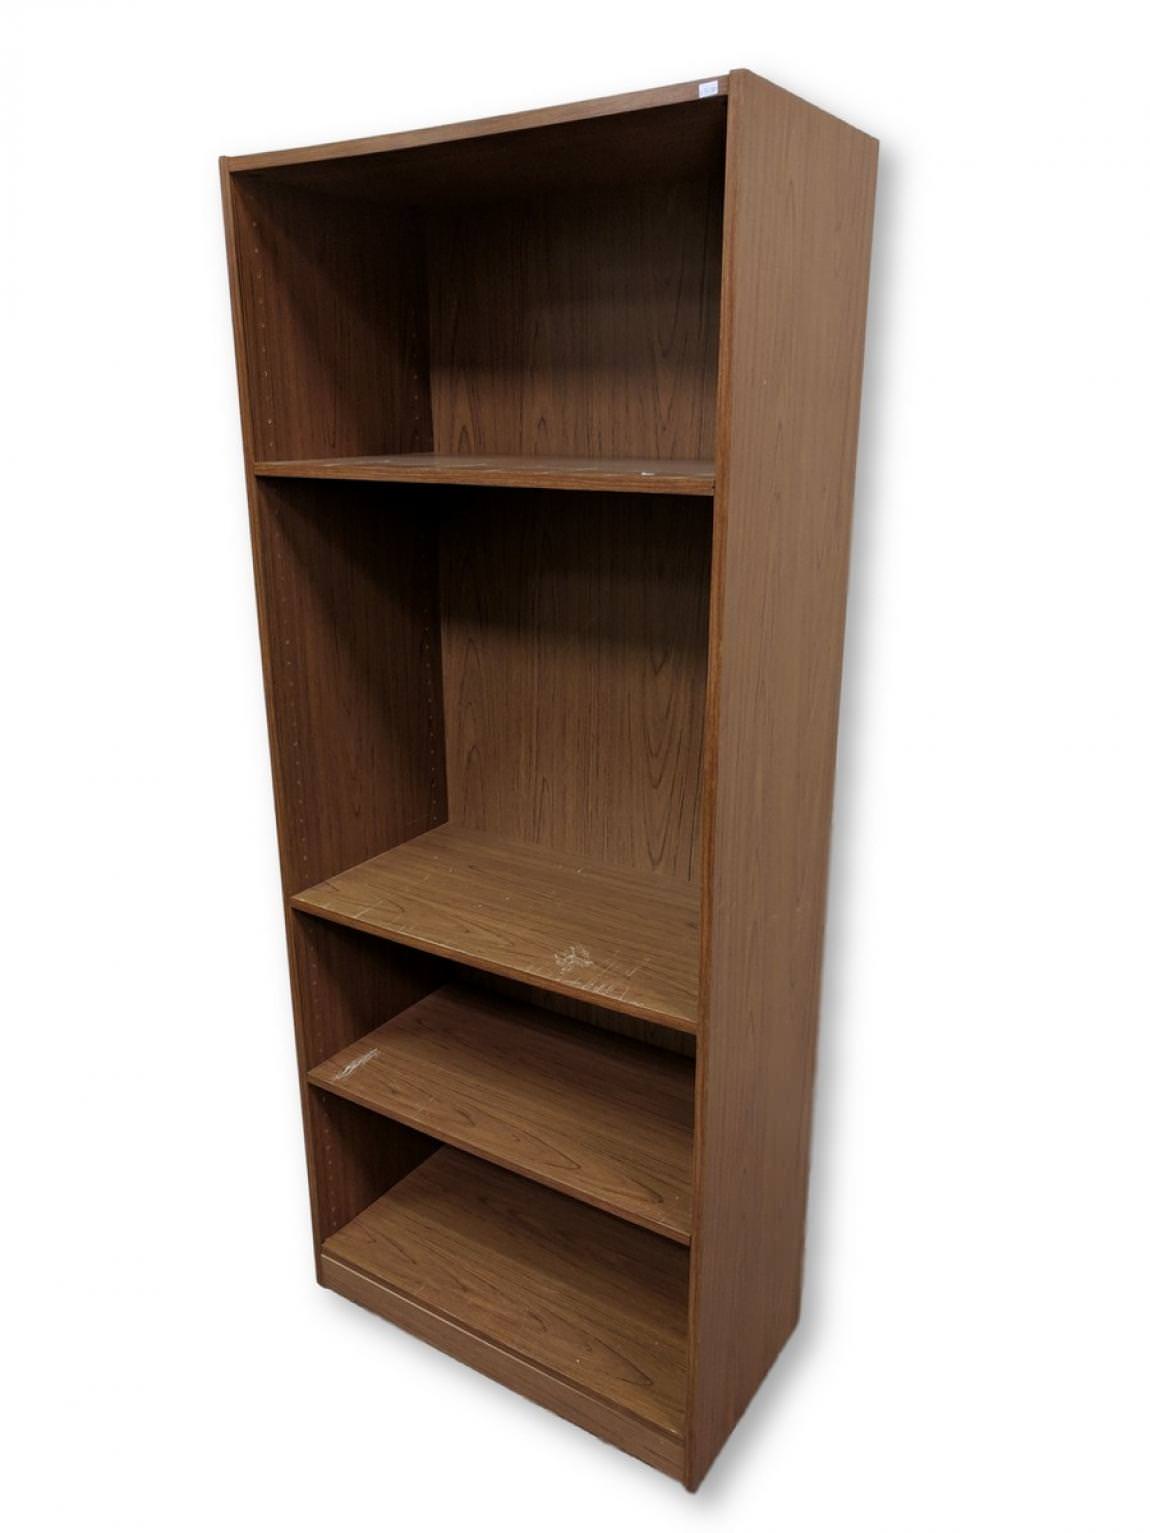 Walnut Laminate Bookshelf - 30 Inch Wide